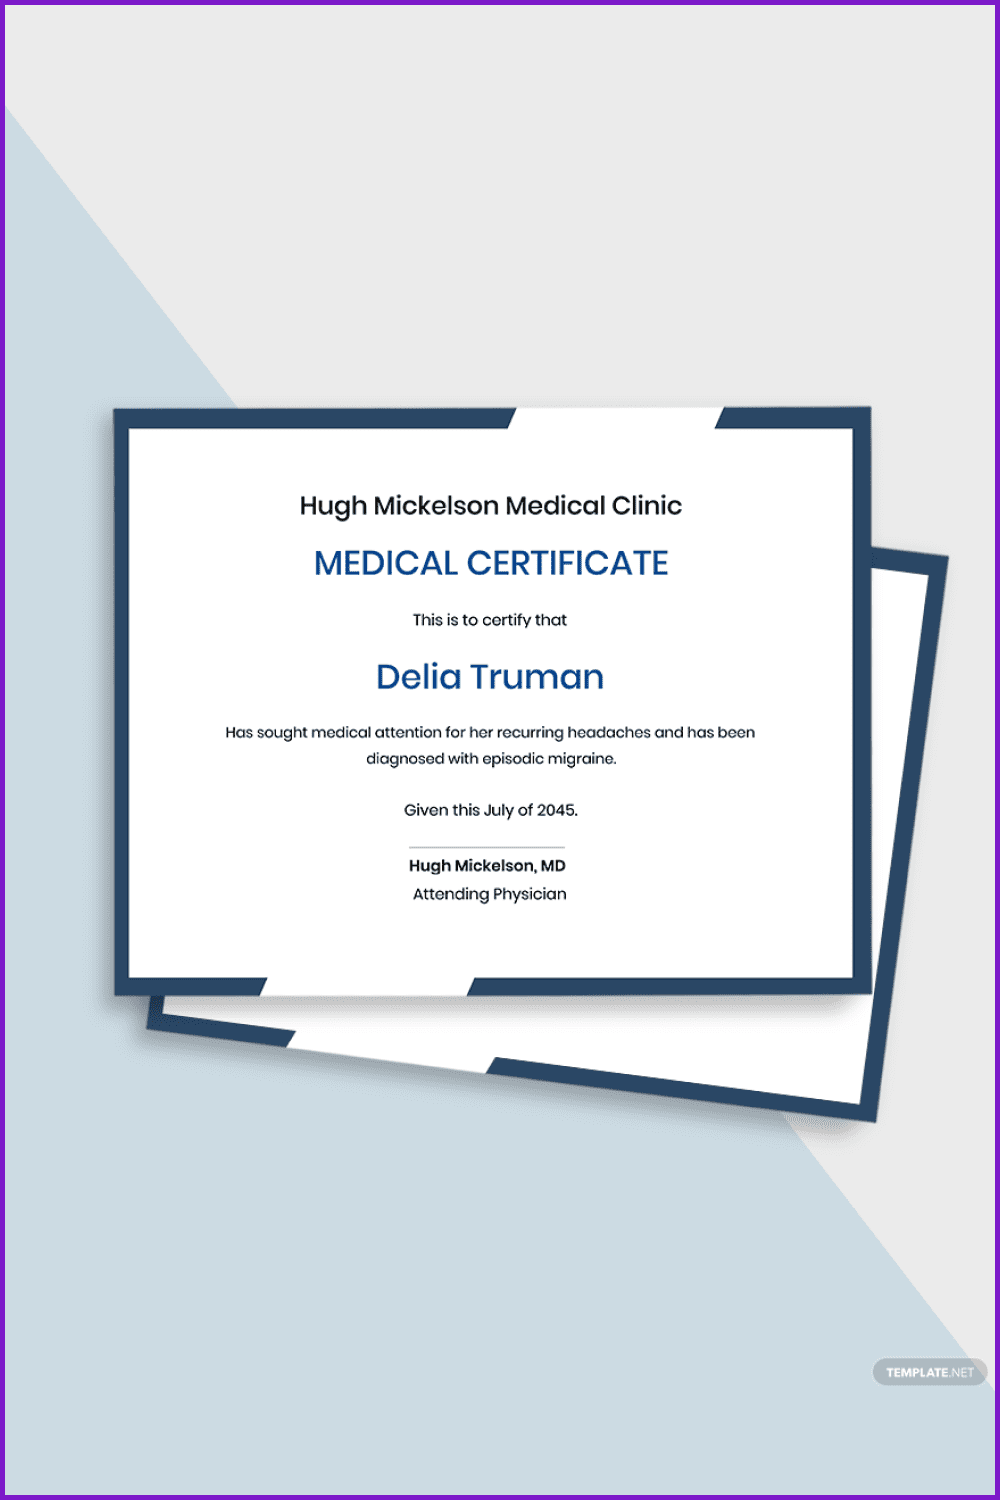 Medical Certificate Template.